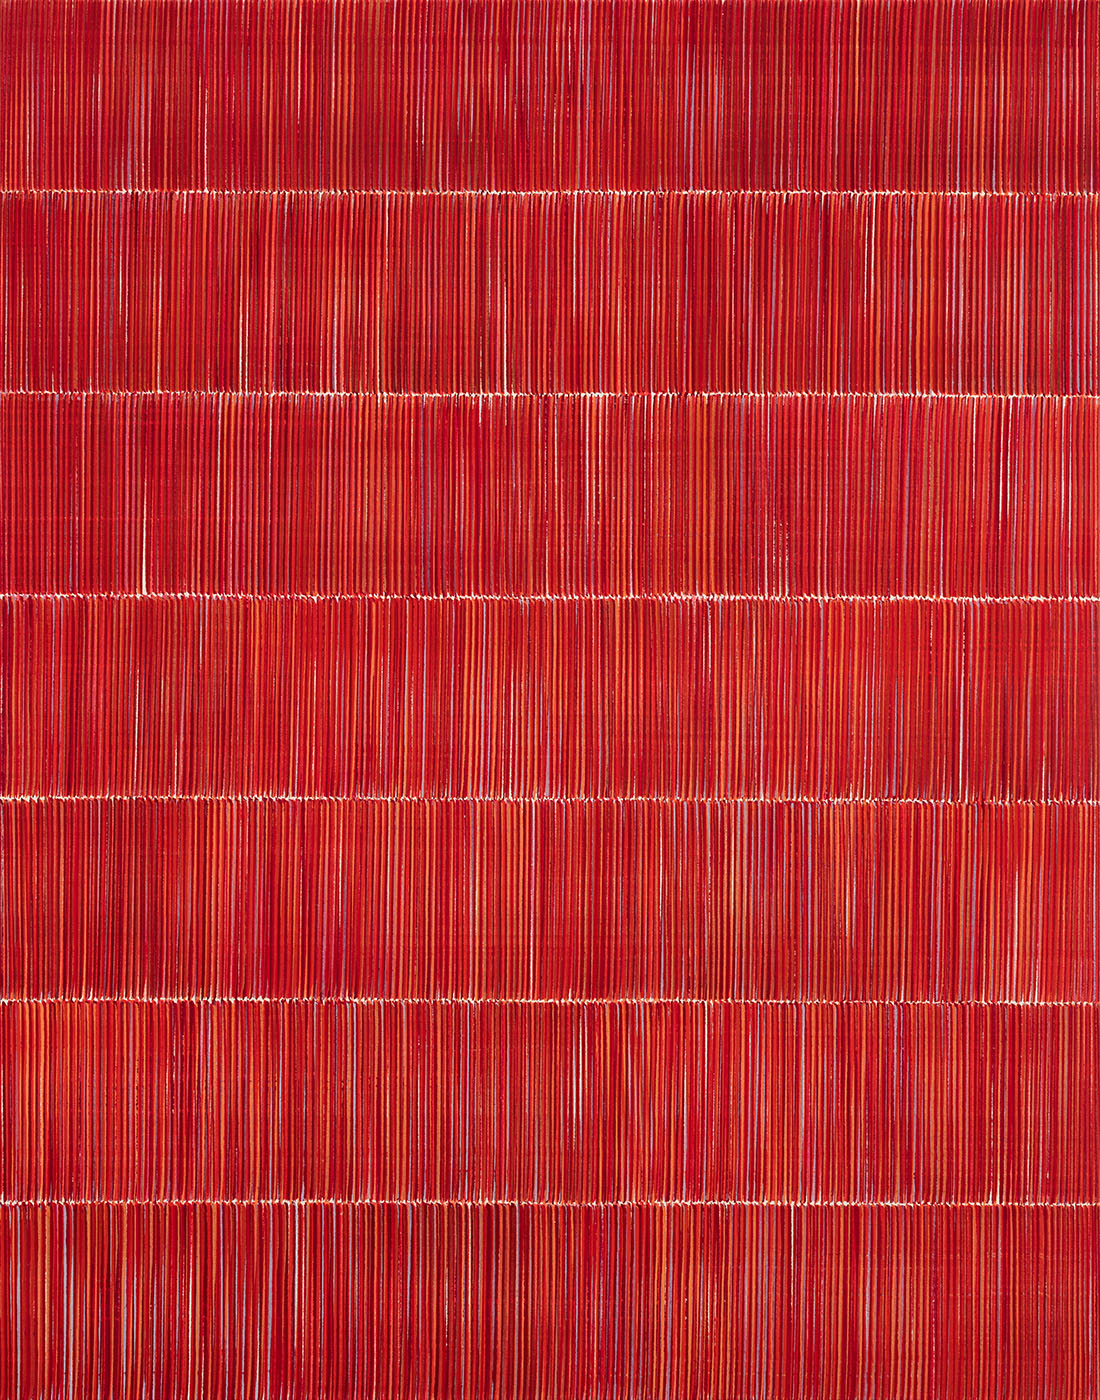 Nikola Dimitrov, KlangRaum XII, 2021, Pigmente, Bindemittel auf Leinwand, 140 × 110 cm